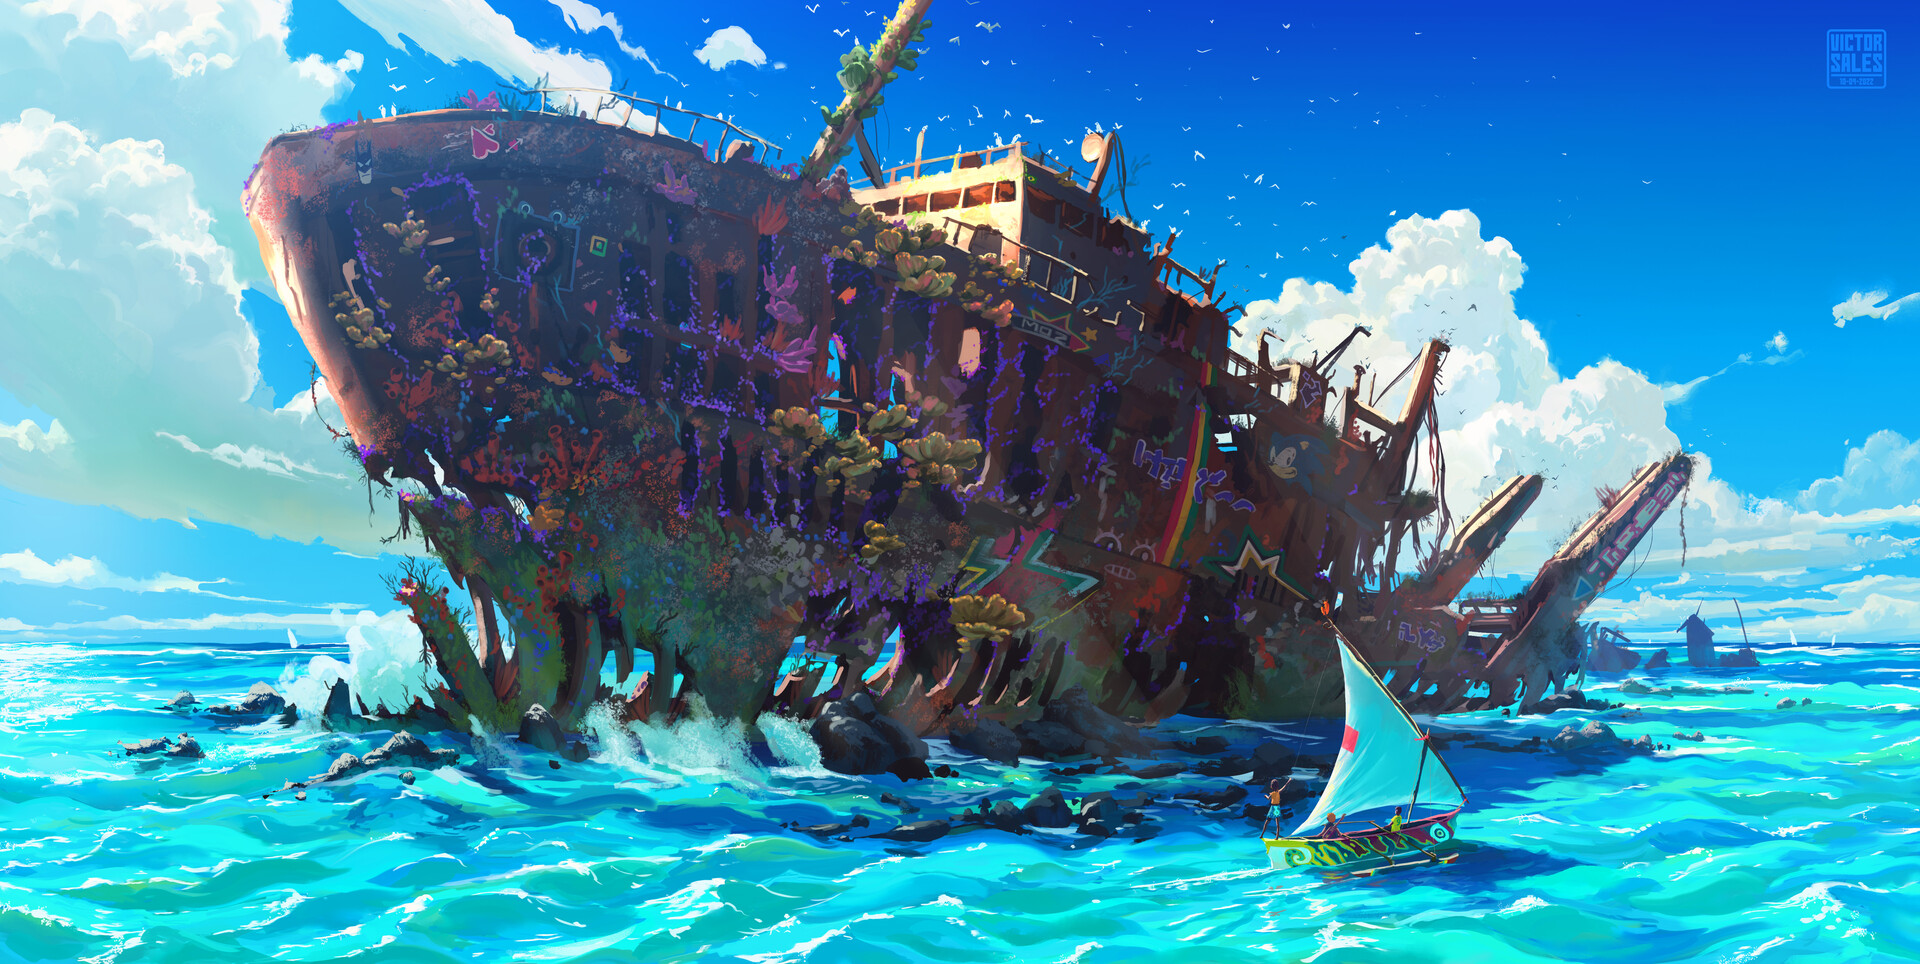 Victor Sales Digital Art Fantasy Art ArtStation Coral Ruins Shipwreck Sailing Ship Clouds Graffiti C 1920x964